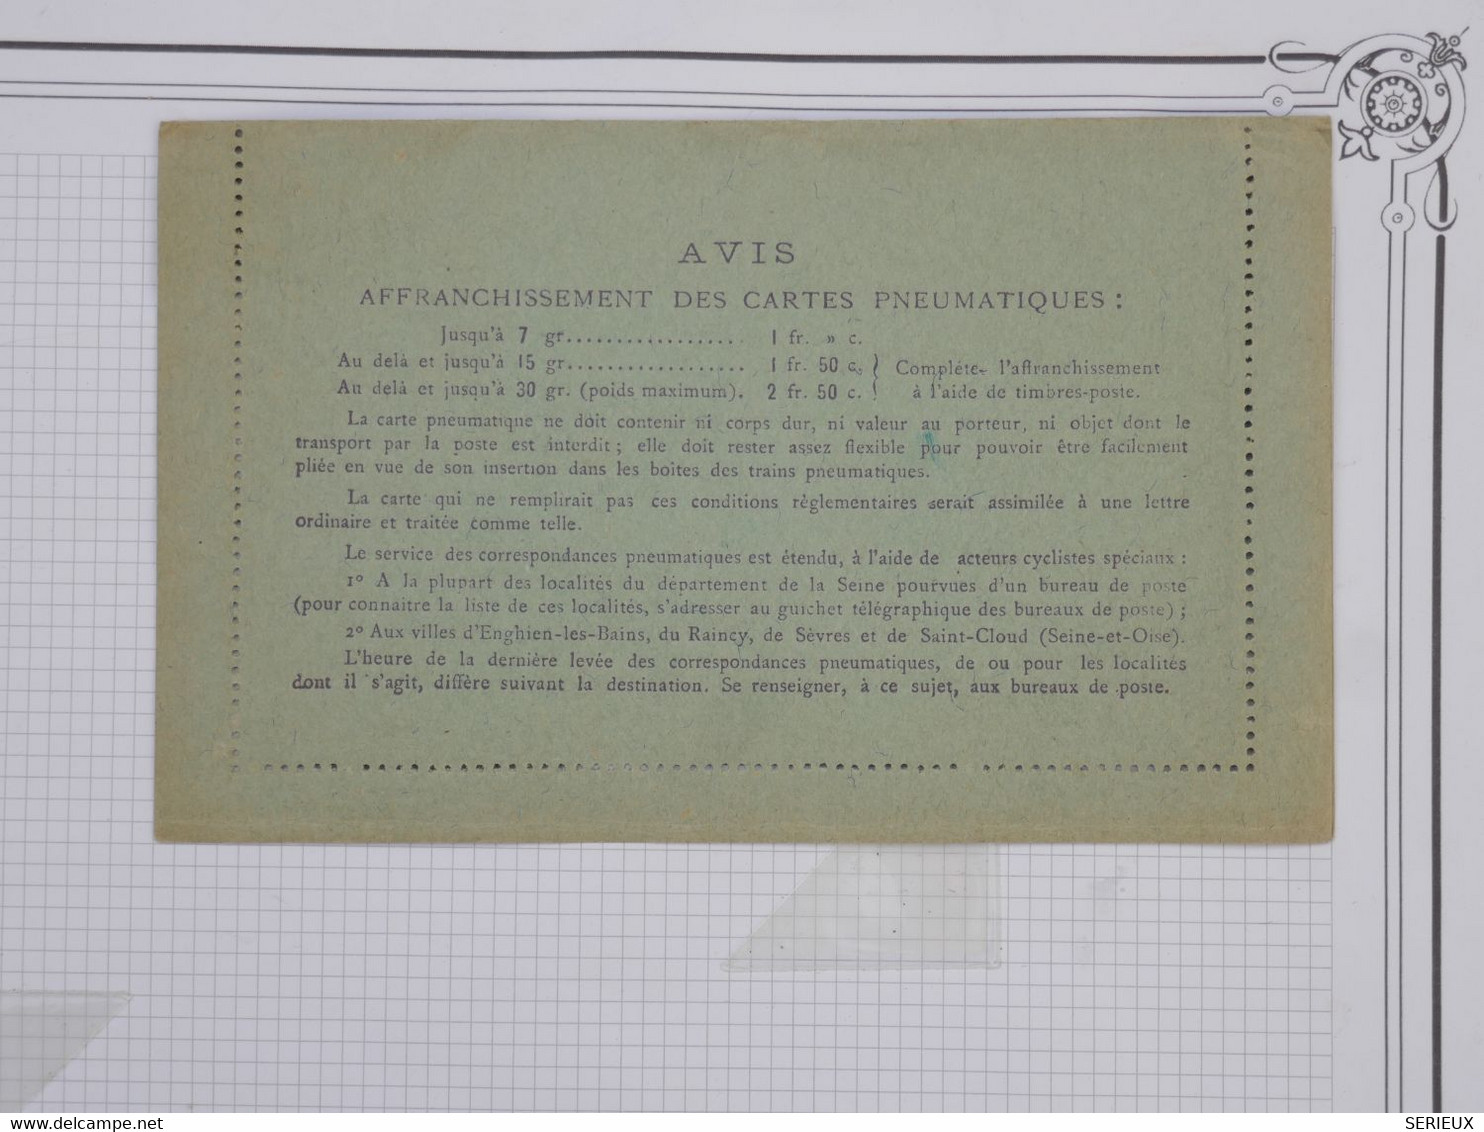 BF15 FRANCE  BELLE CARTE PNEUMATIQUE  TELEGRAPHE 1F 1935  NON VOYAGEE+++ - Rohrpost